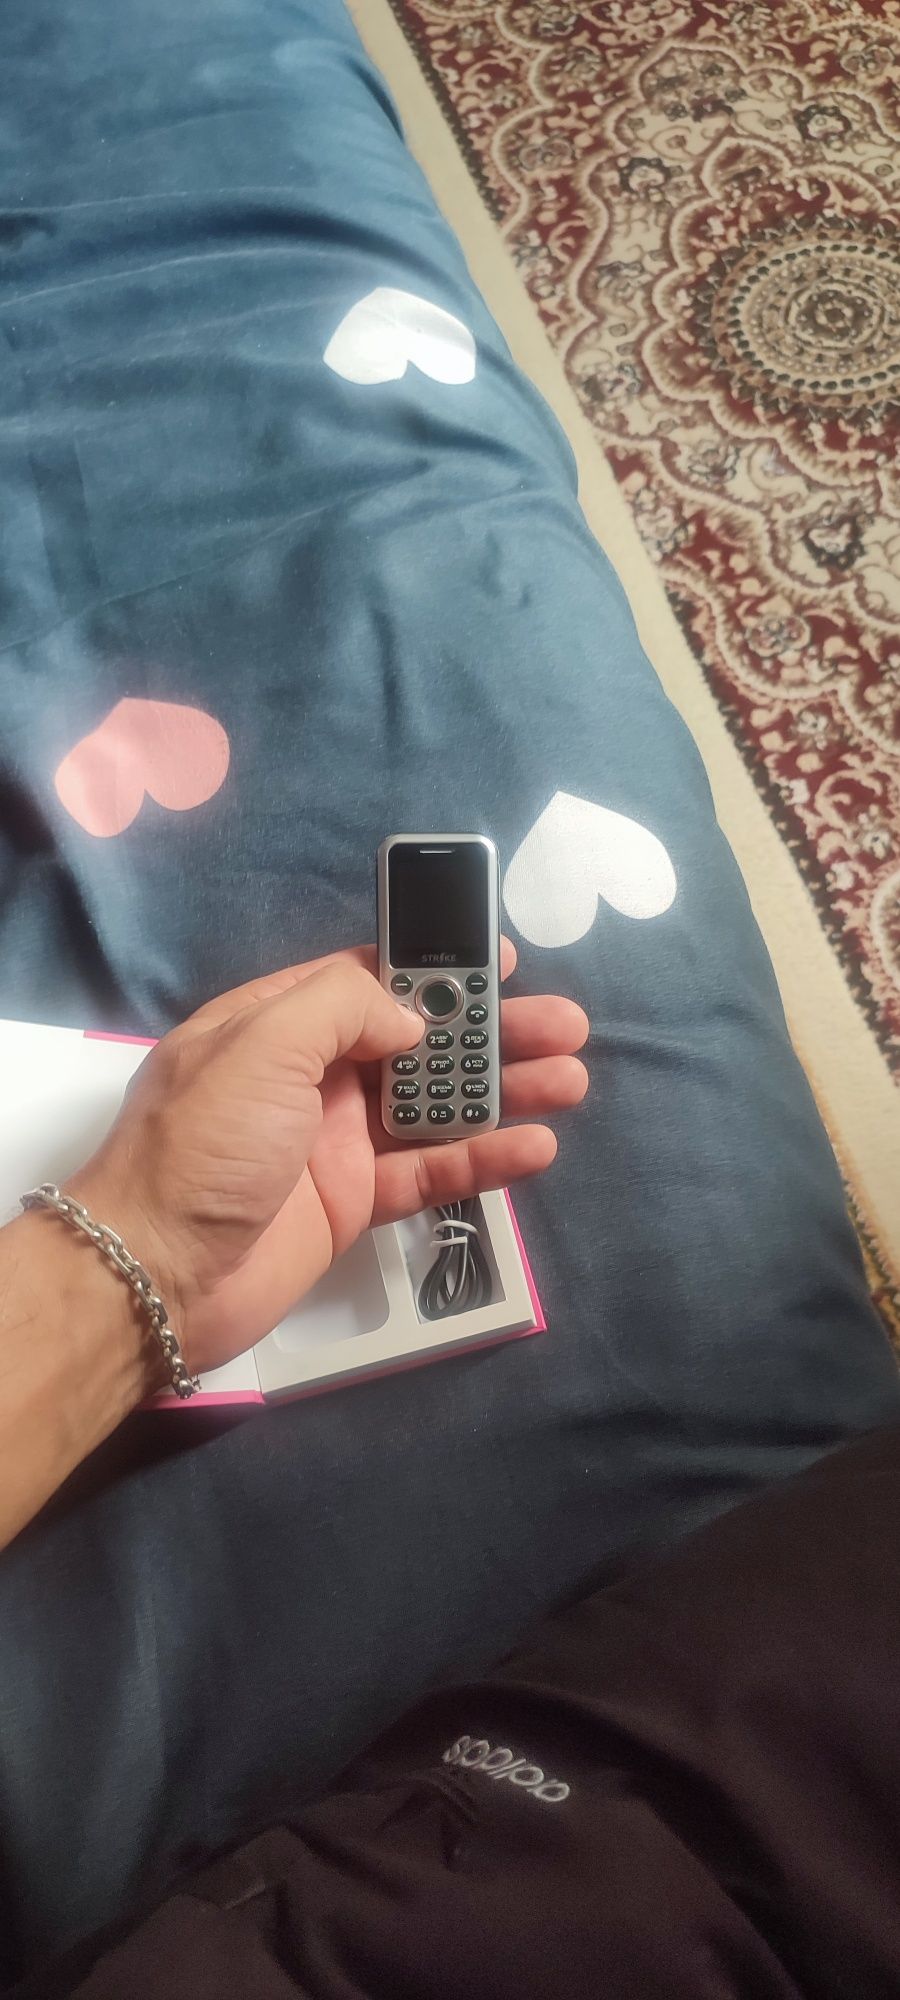 Mini telefon 2 simkarta fleshka